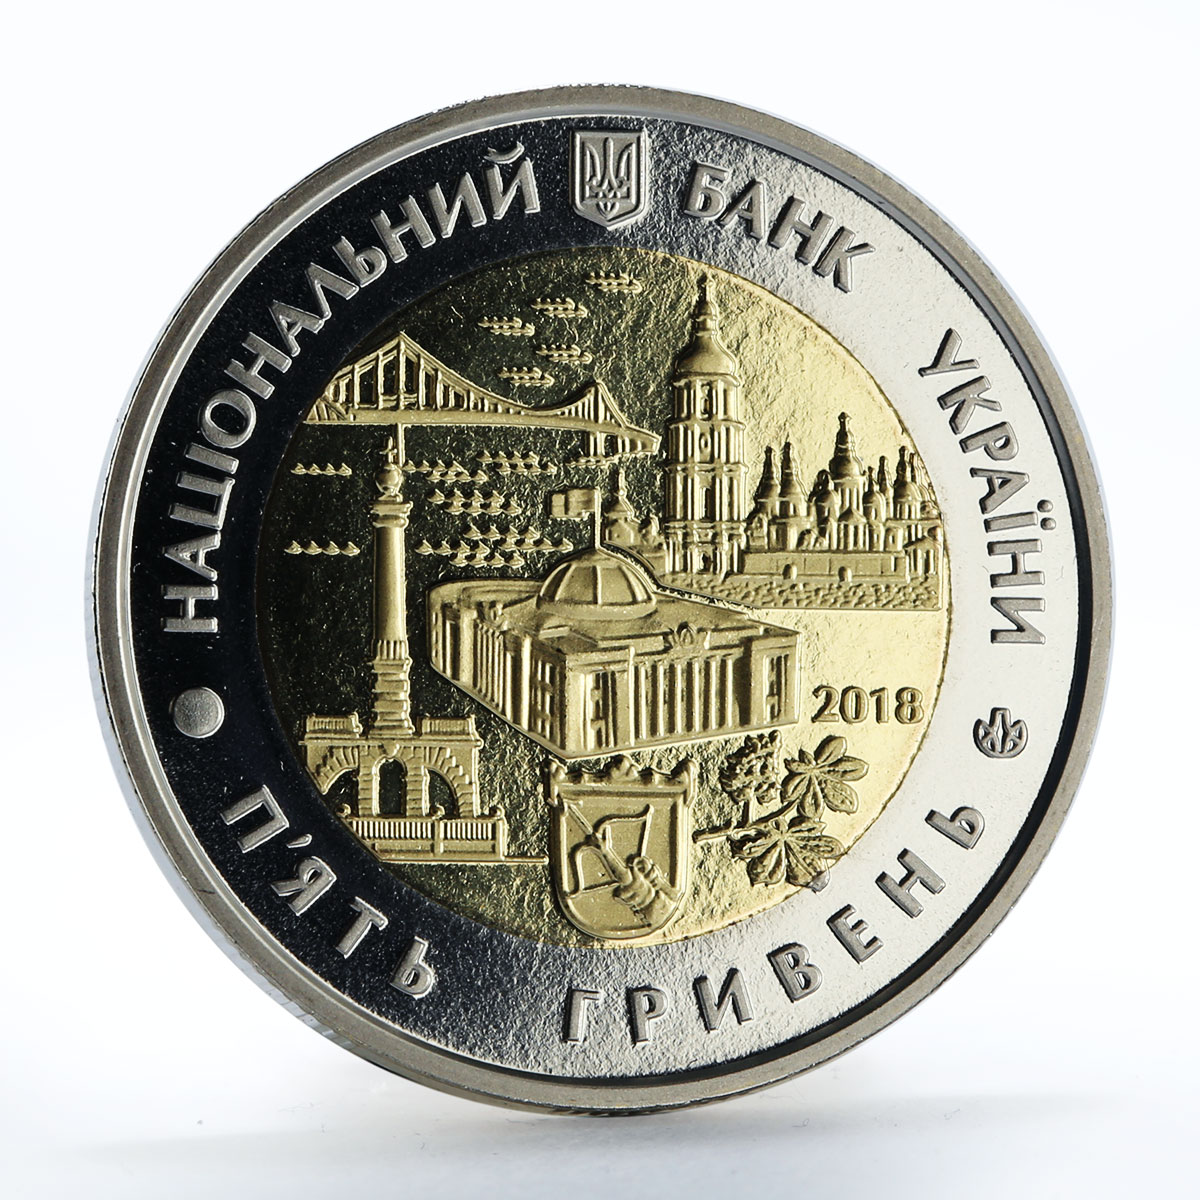 Ukraine 5 hryvnias Kiev city Archangel Michael nickel coin 2018